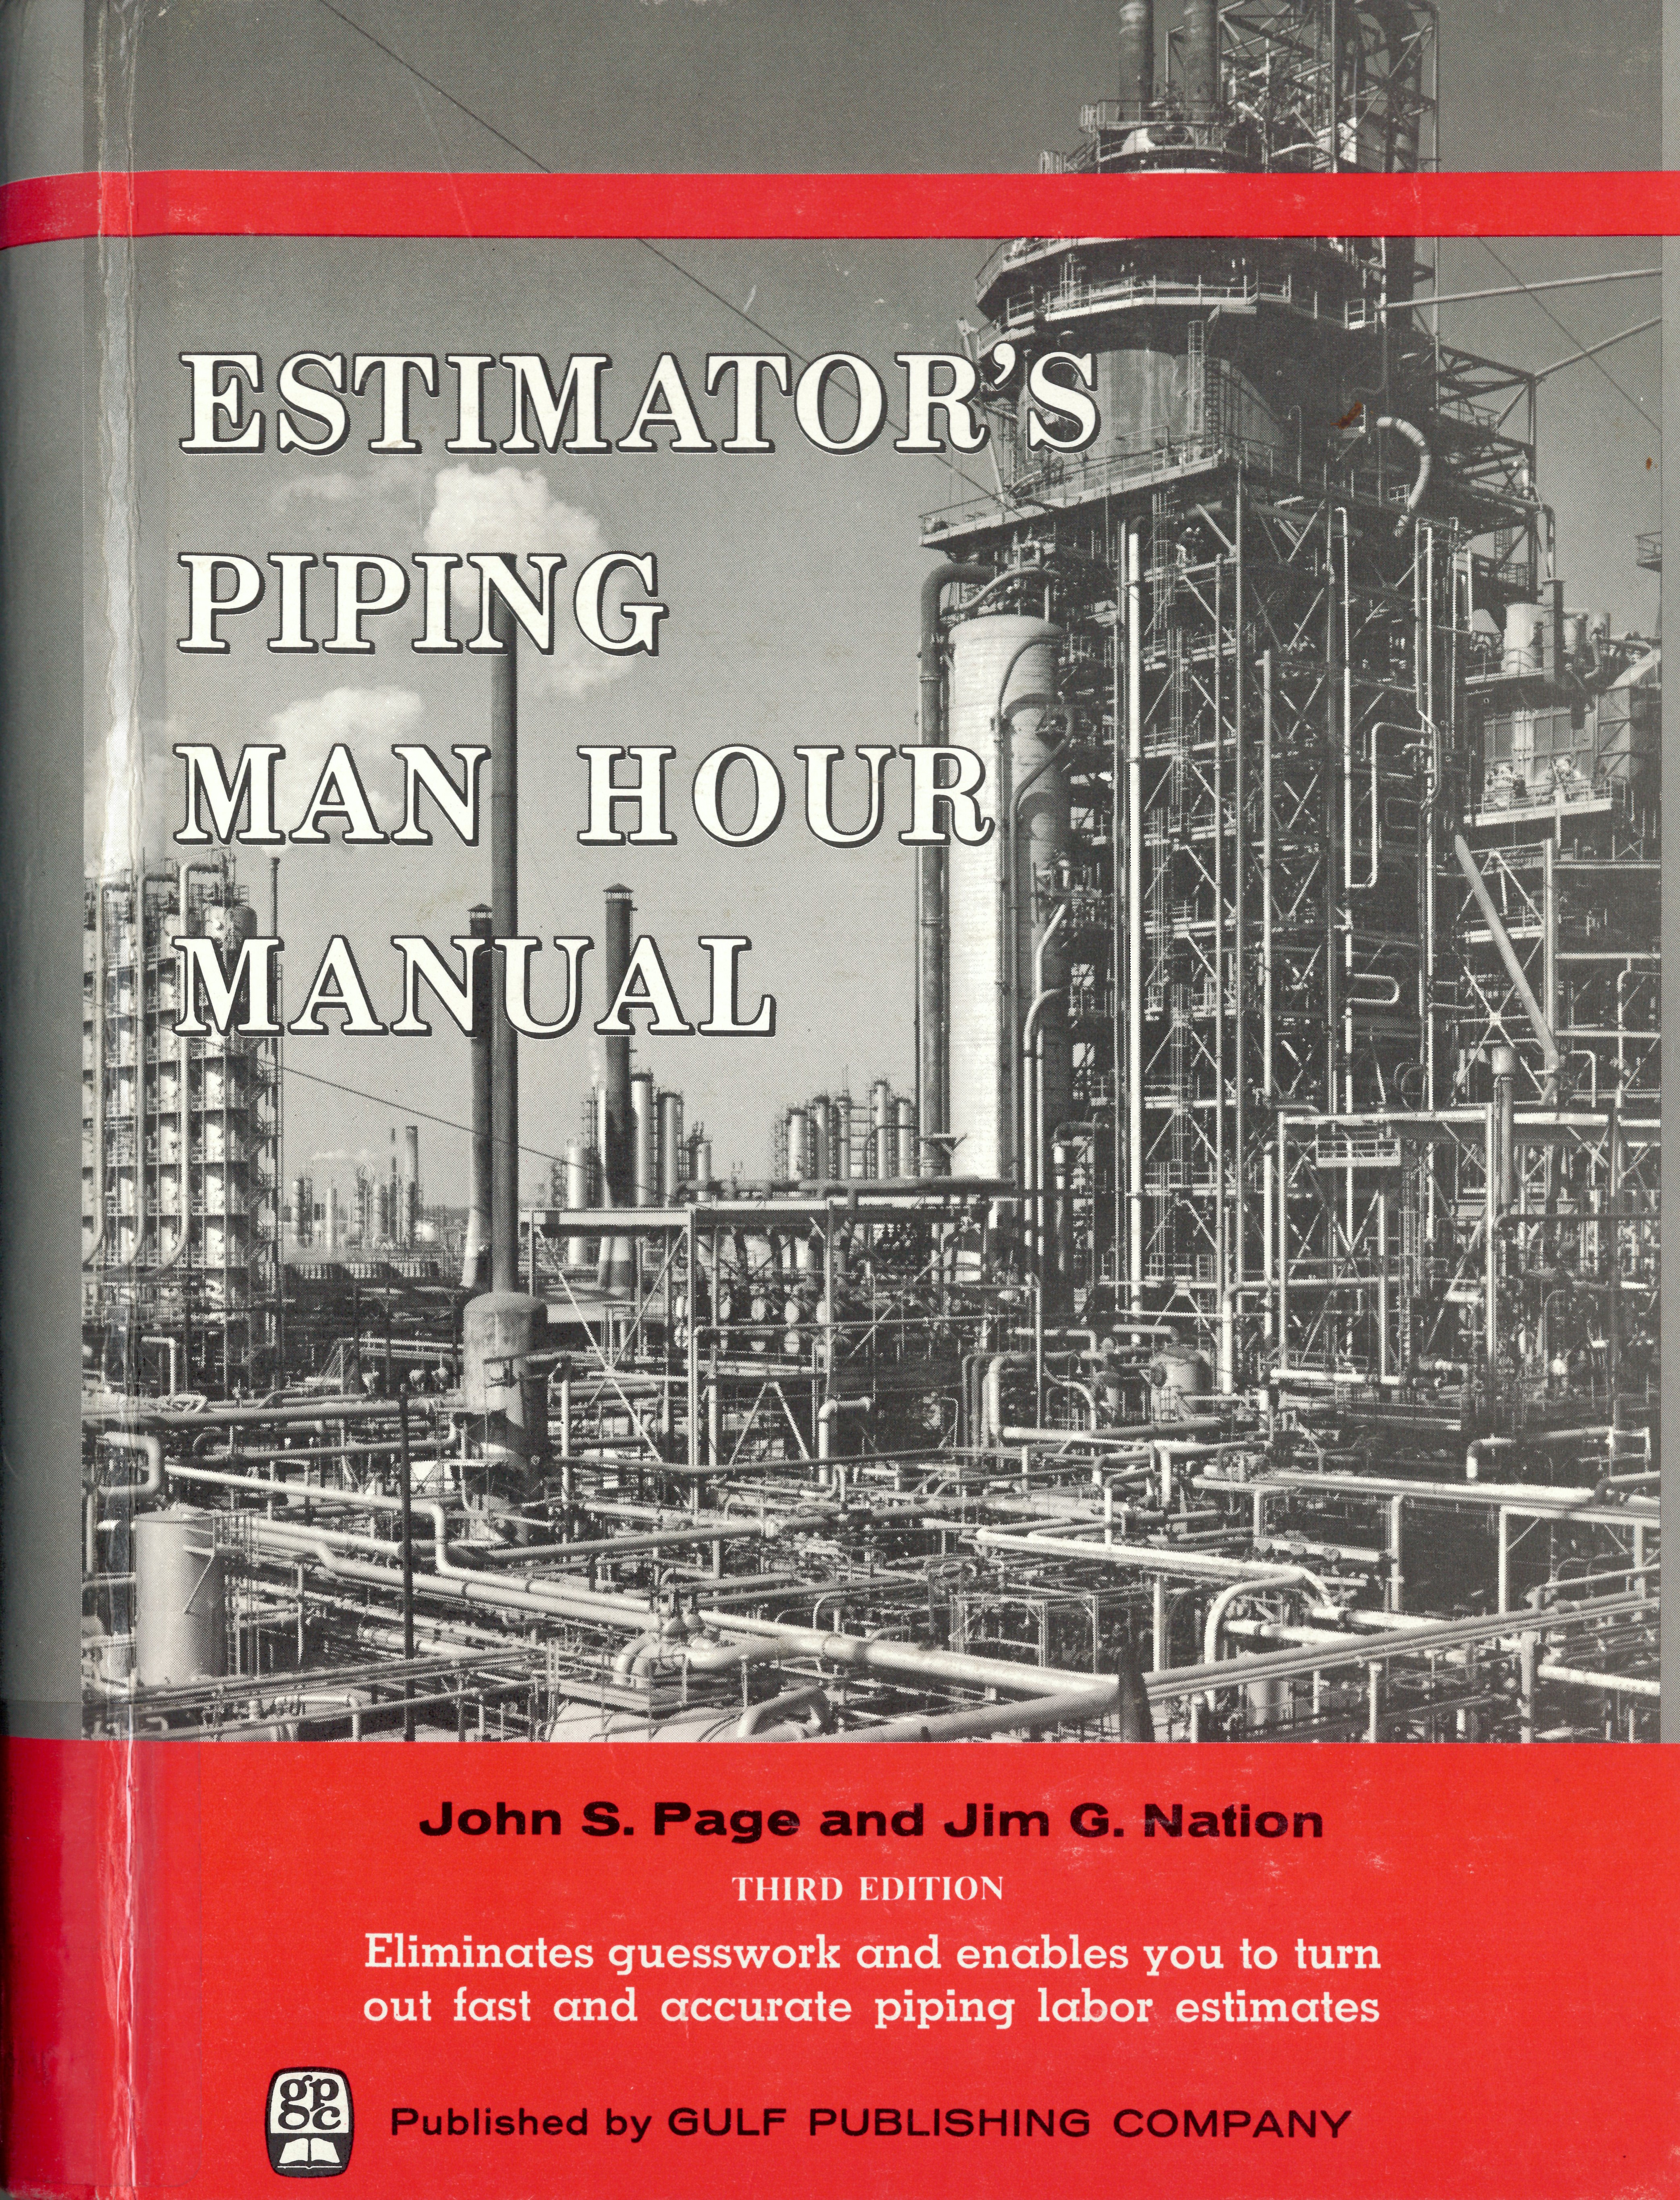 Estimator's piping man hour manual